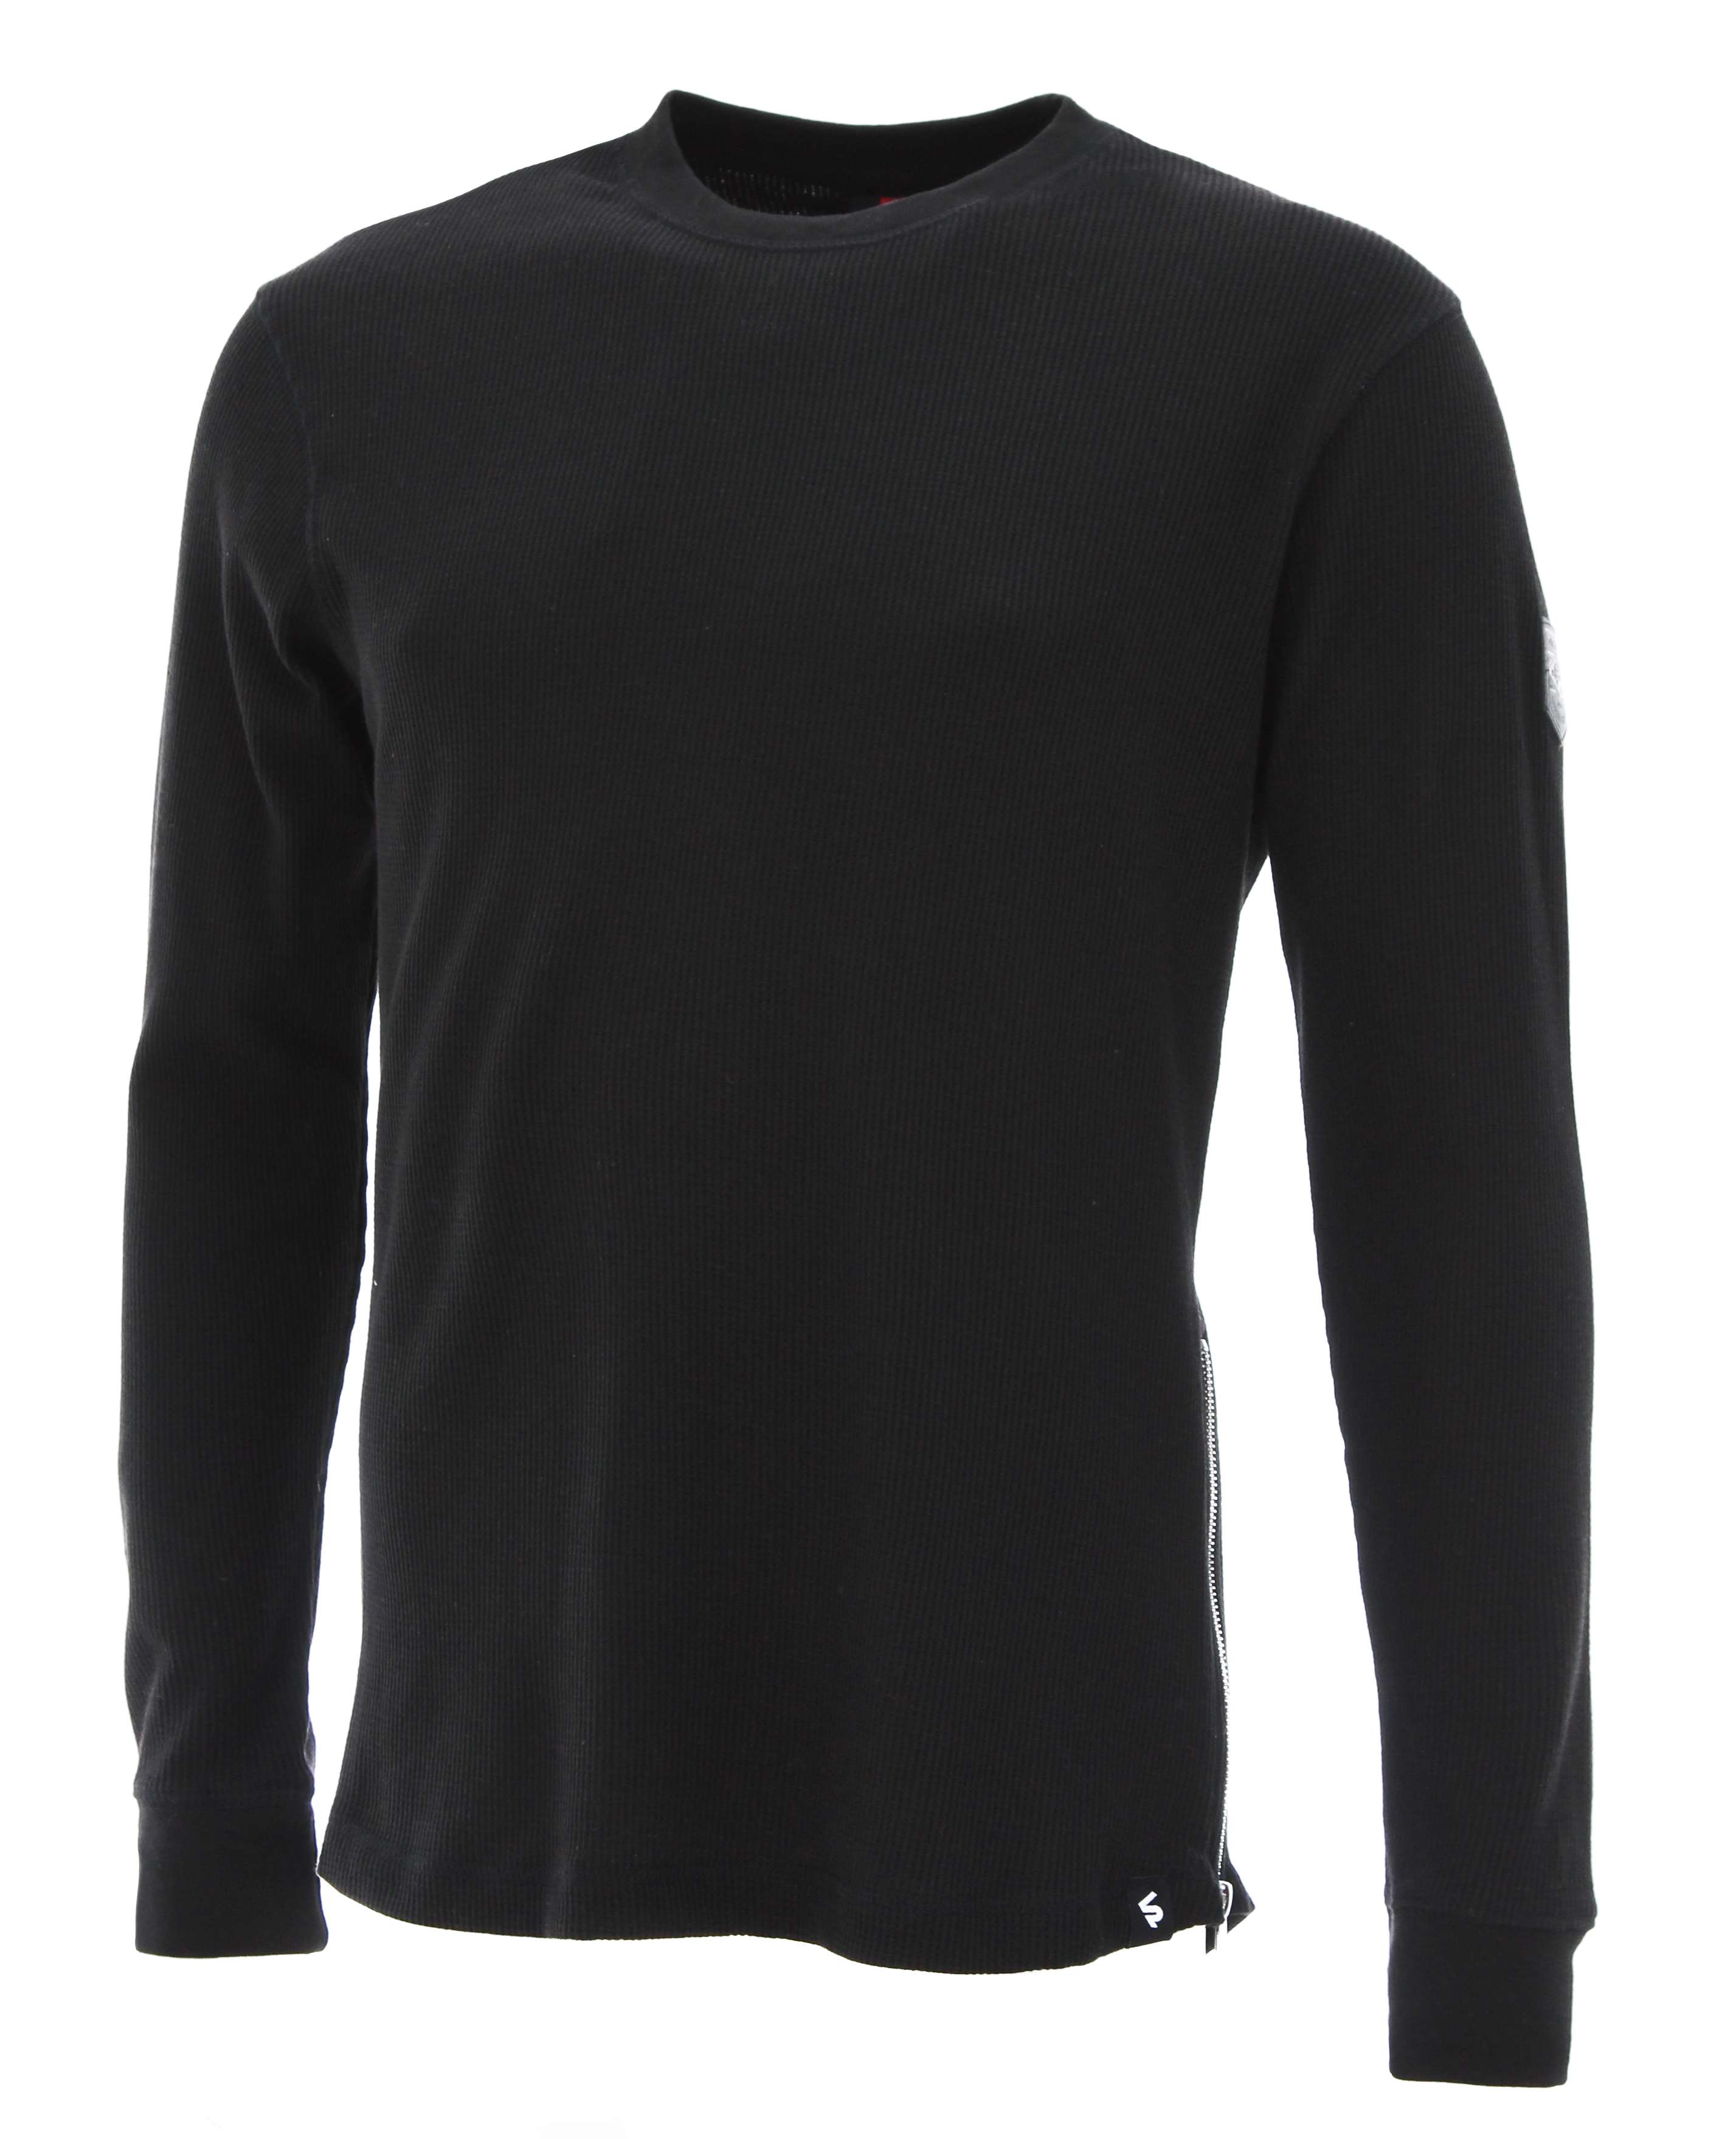 Southpole Men's Scallop Hem Side Zippers Long Sleeve Thermal Shirt | eBay